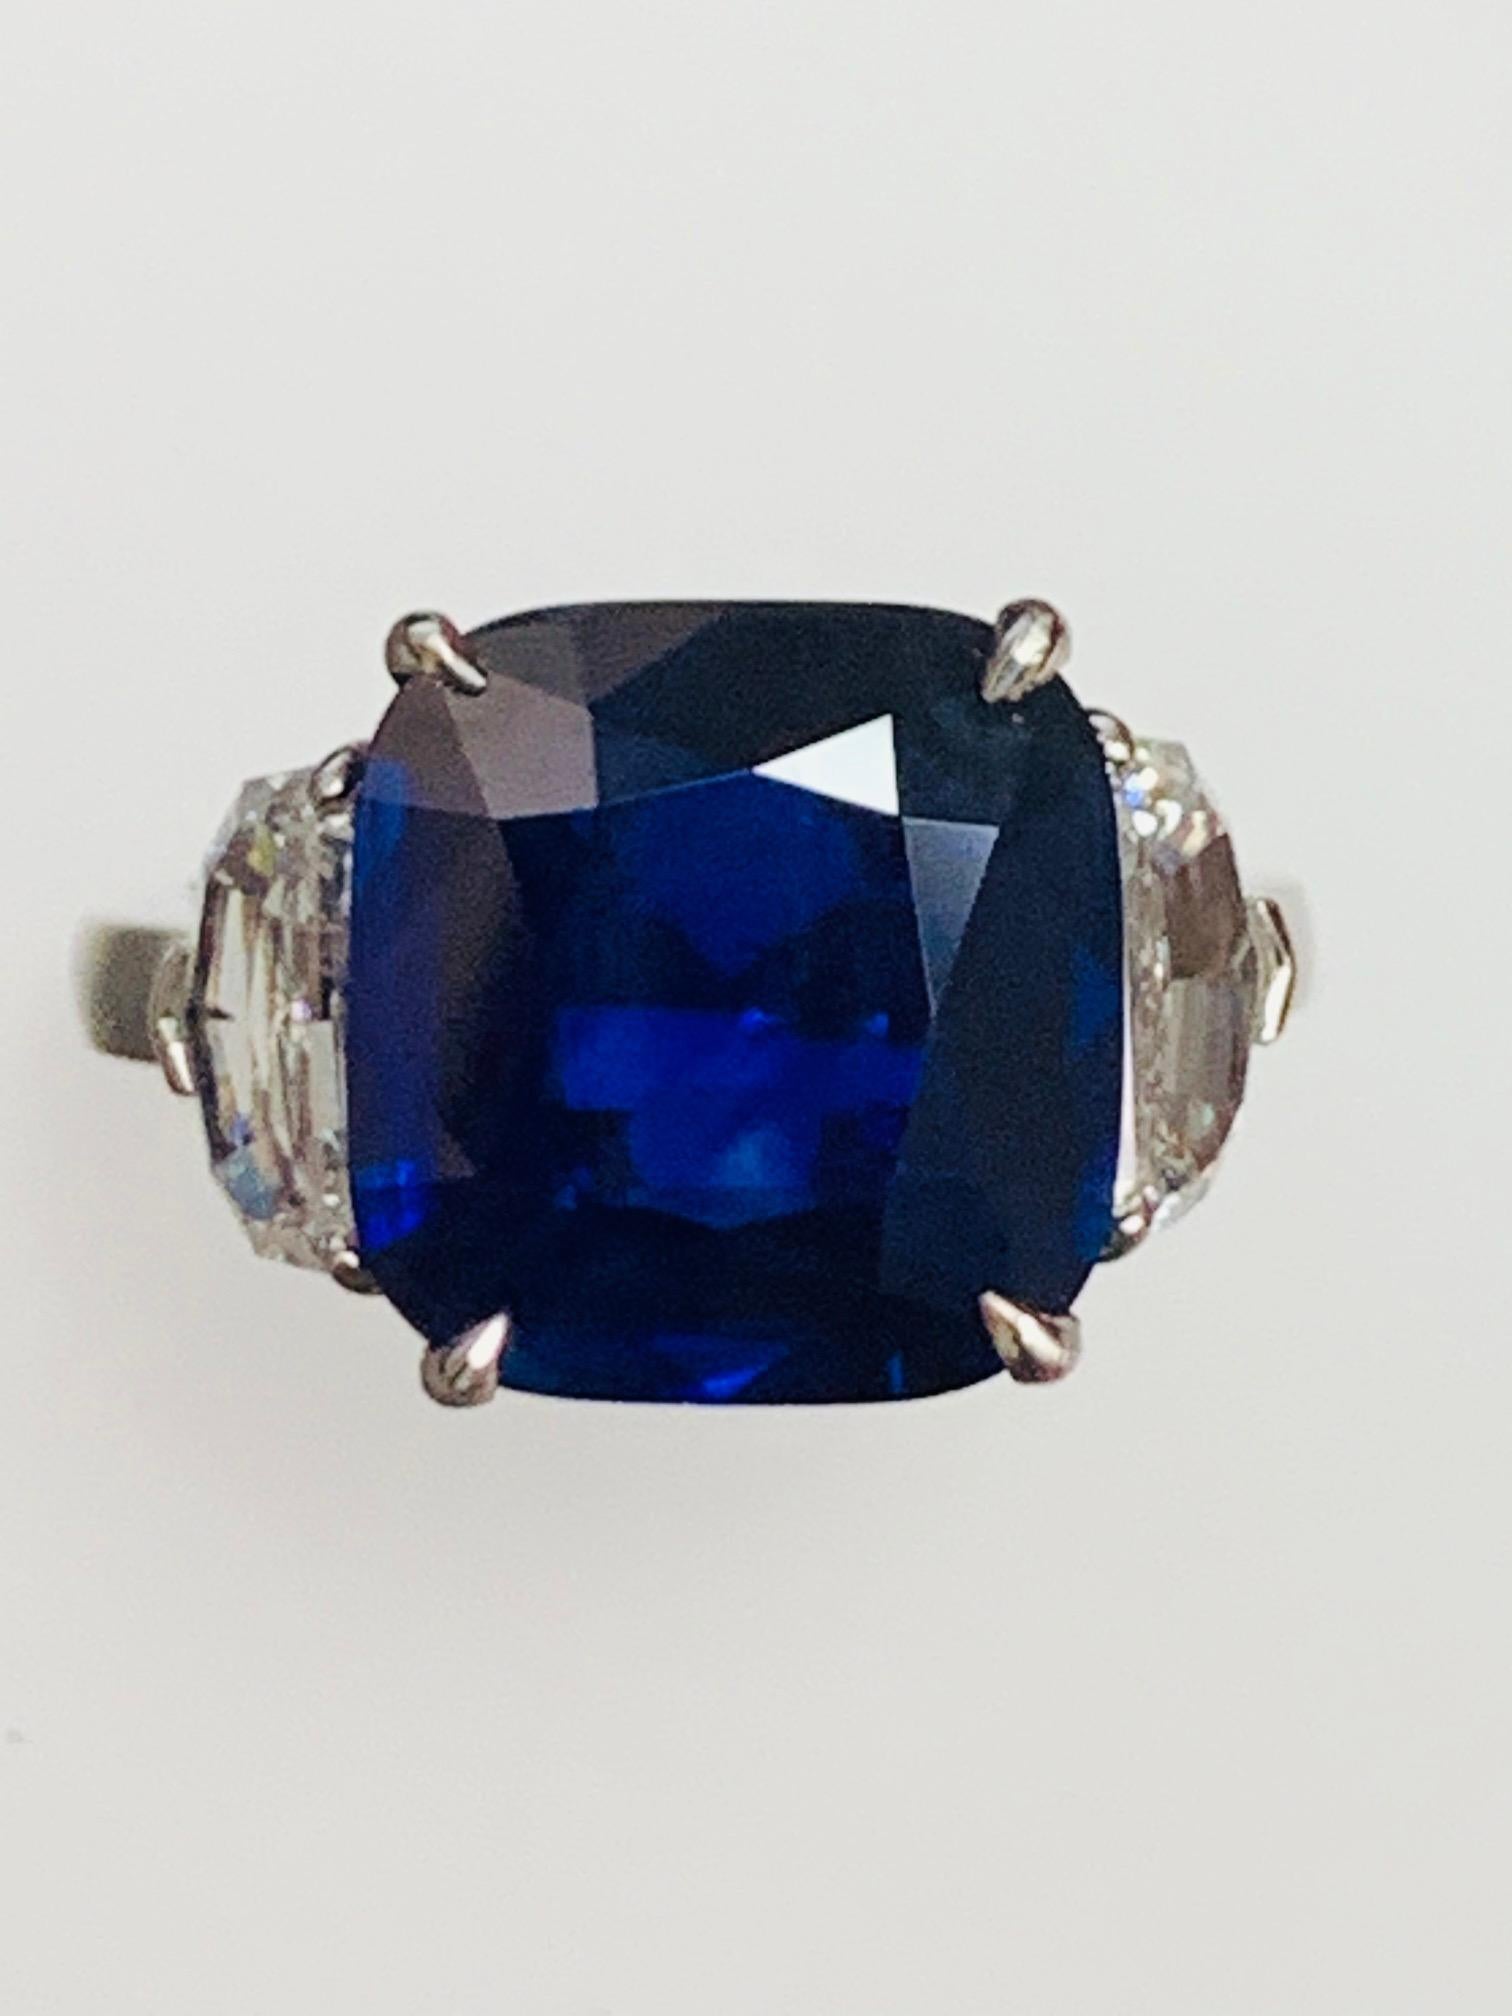 7.38 ct Natural No heat cushion blue sapphire, Madagascar origin , set in classic three stone ring along with 1.40 carat half moon diamonds .